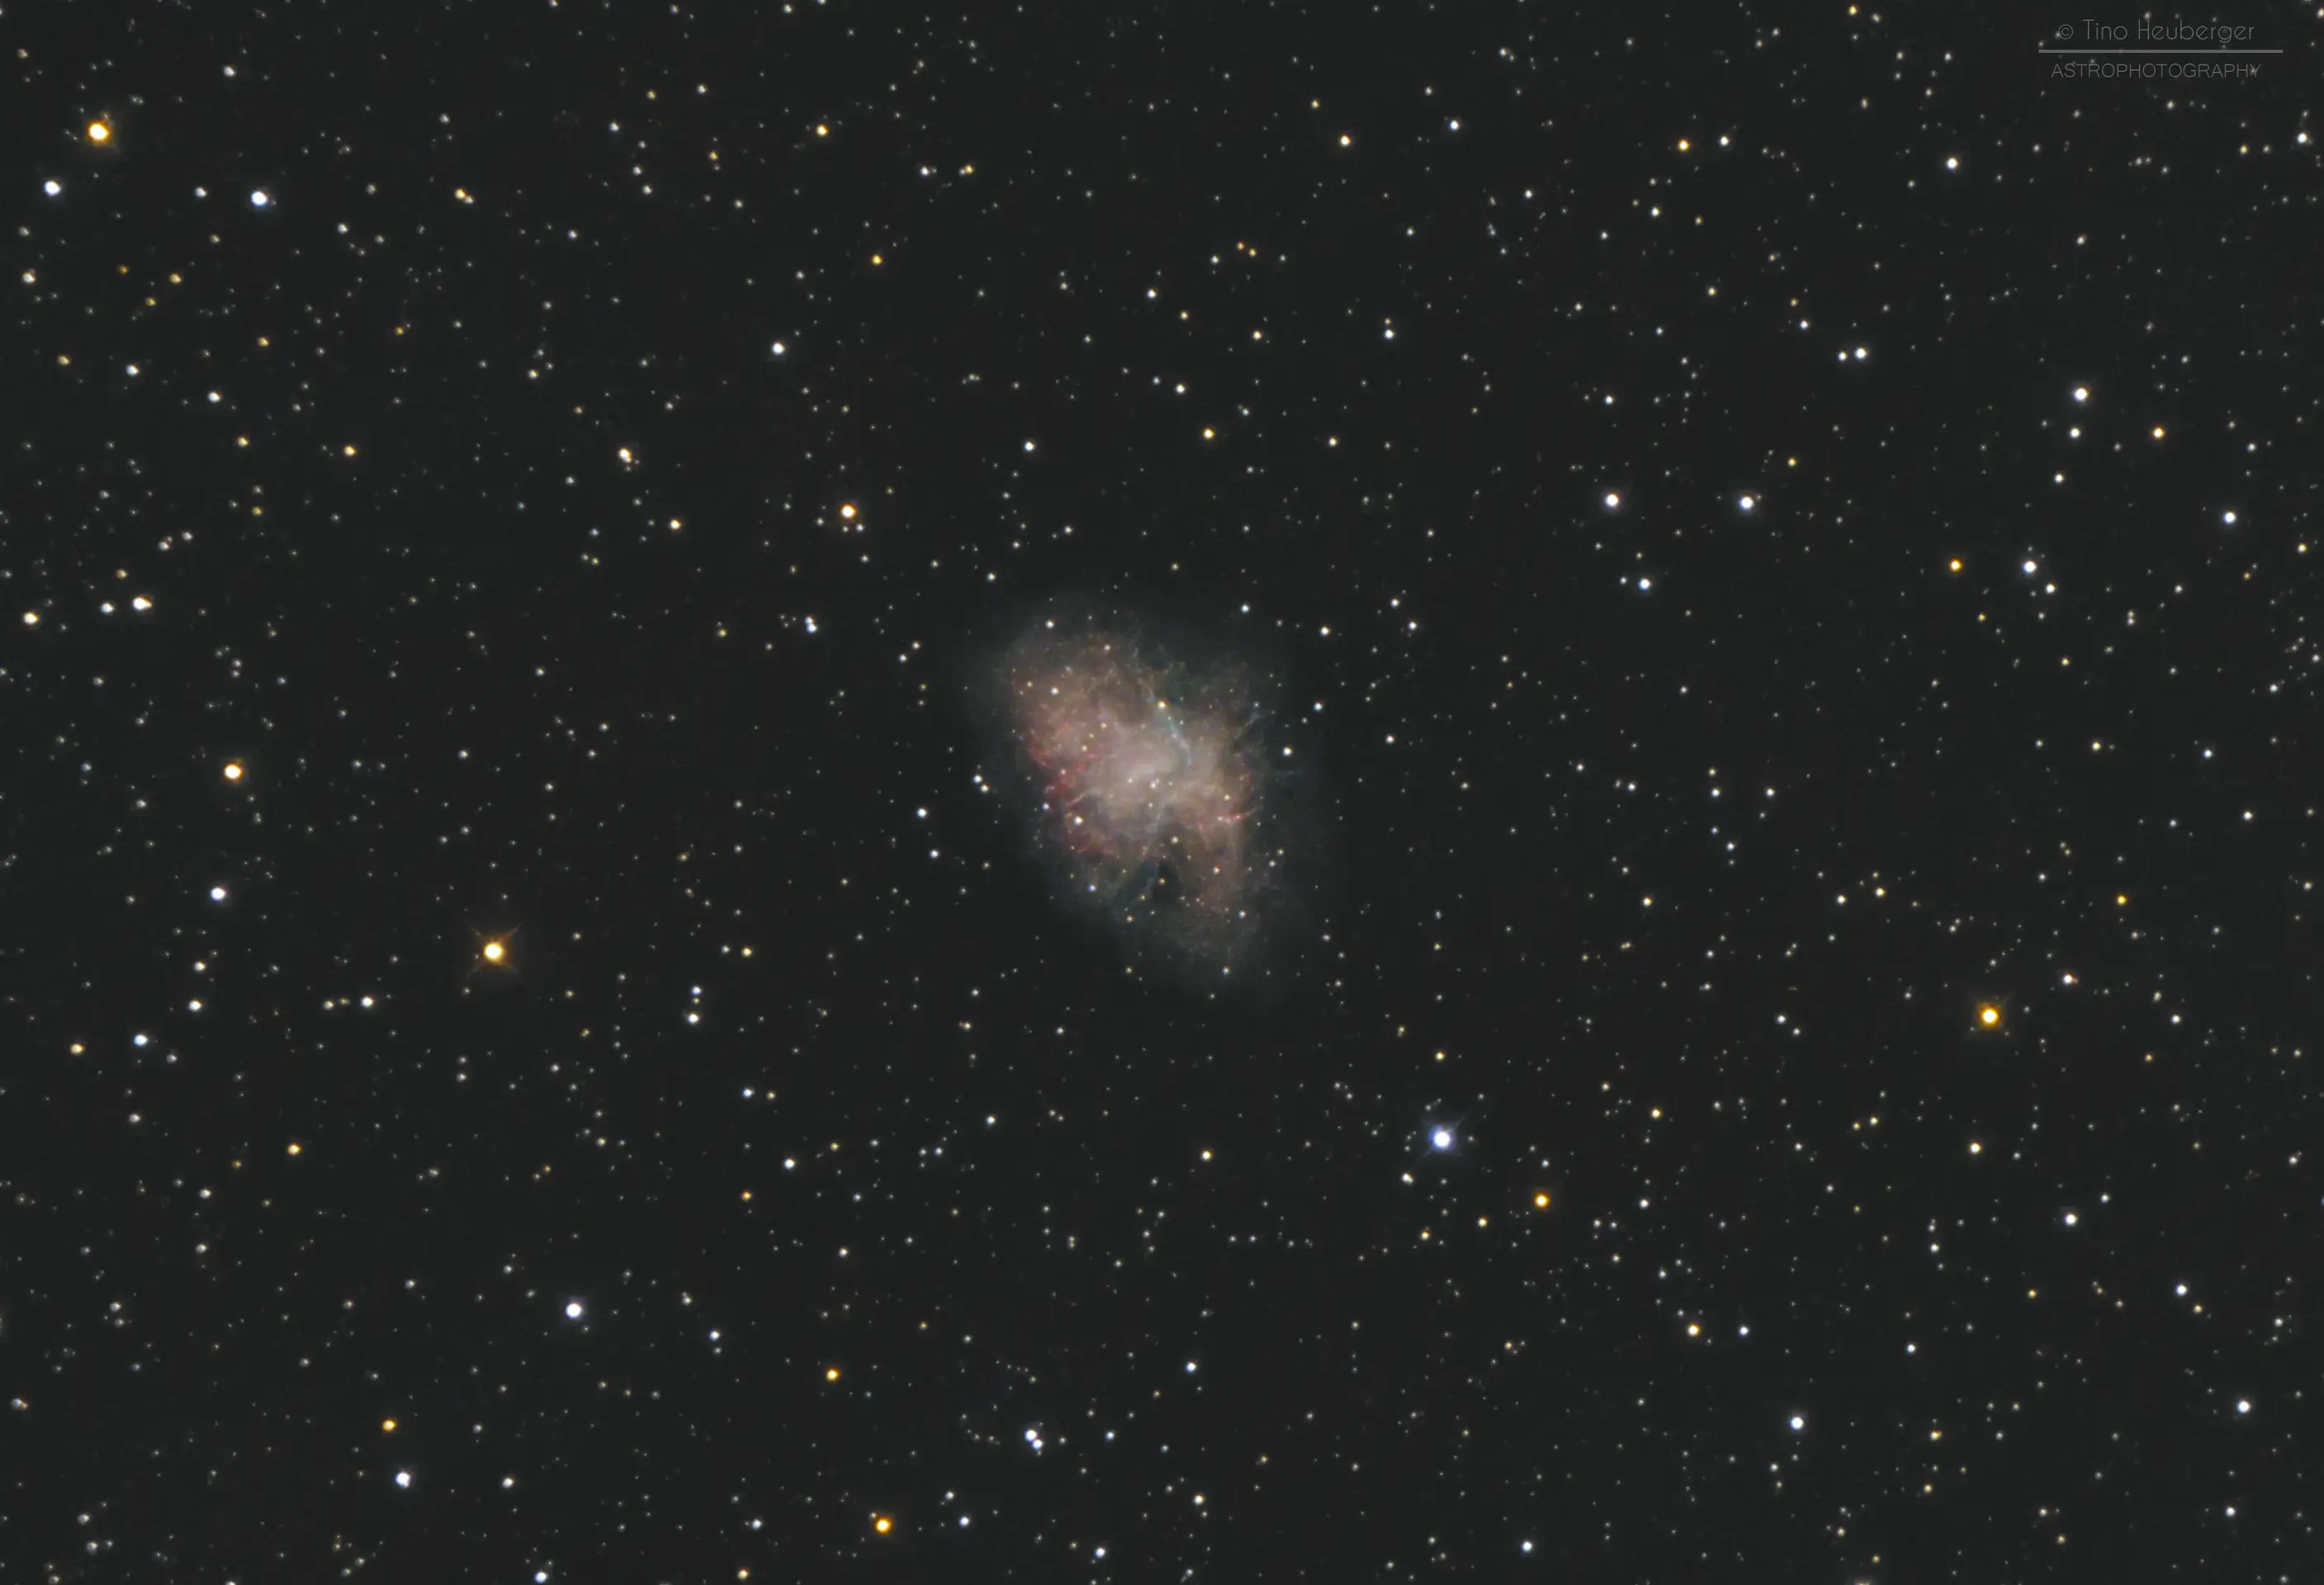 Messier 1: The Crab Nebula